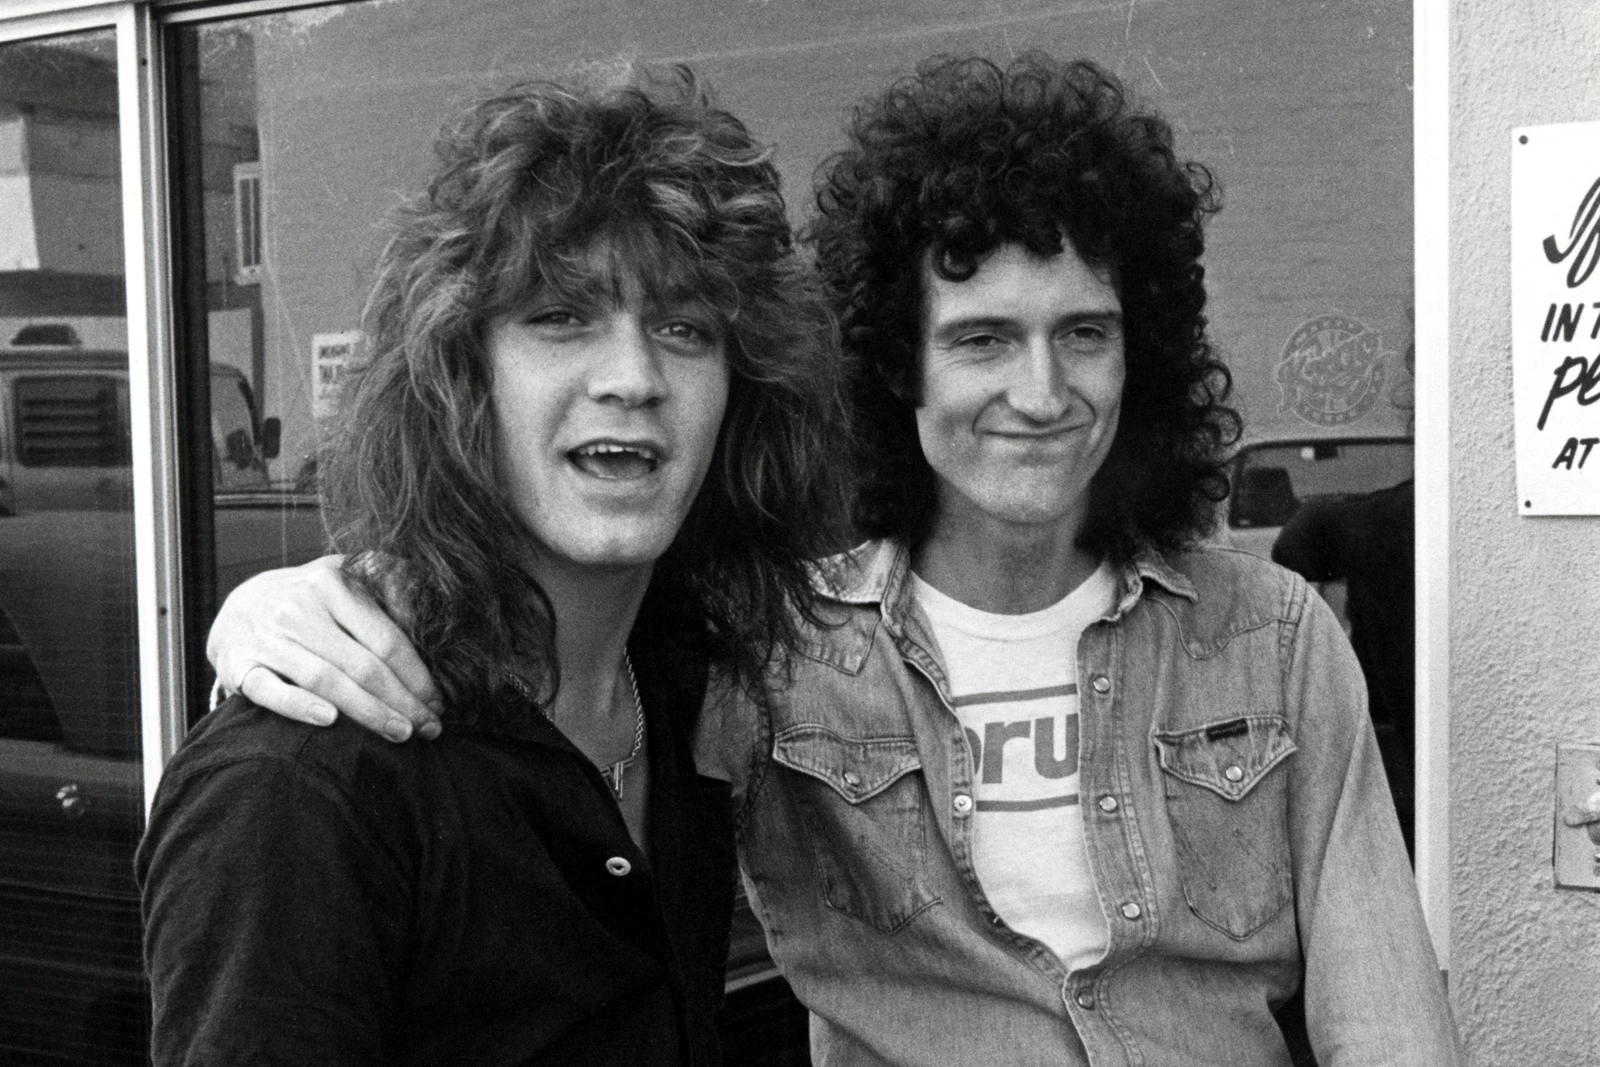 Brian May Preps Expanded Star Fleet Box With Eddie Van Halen